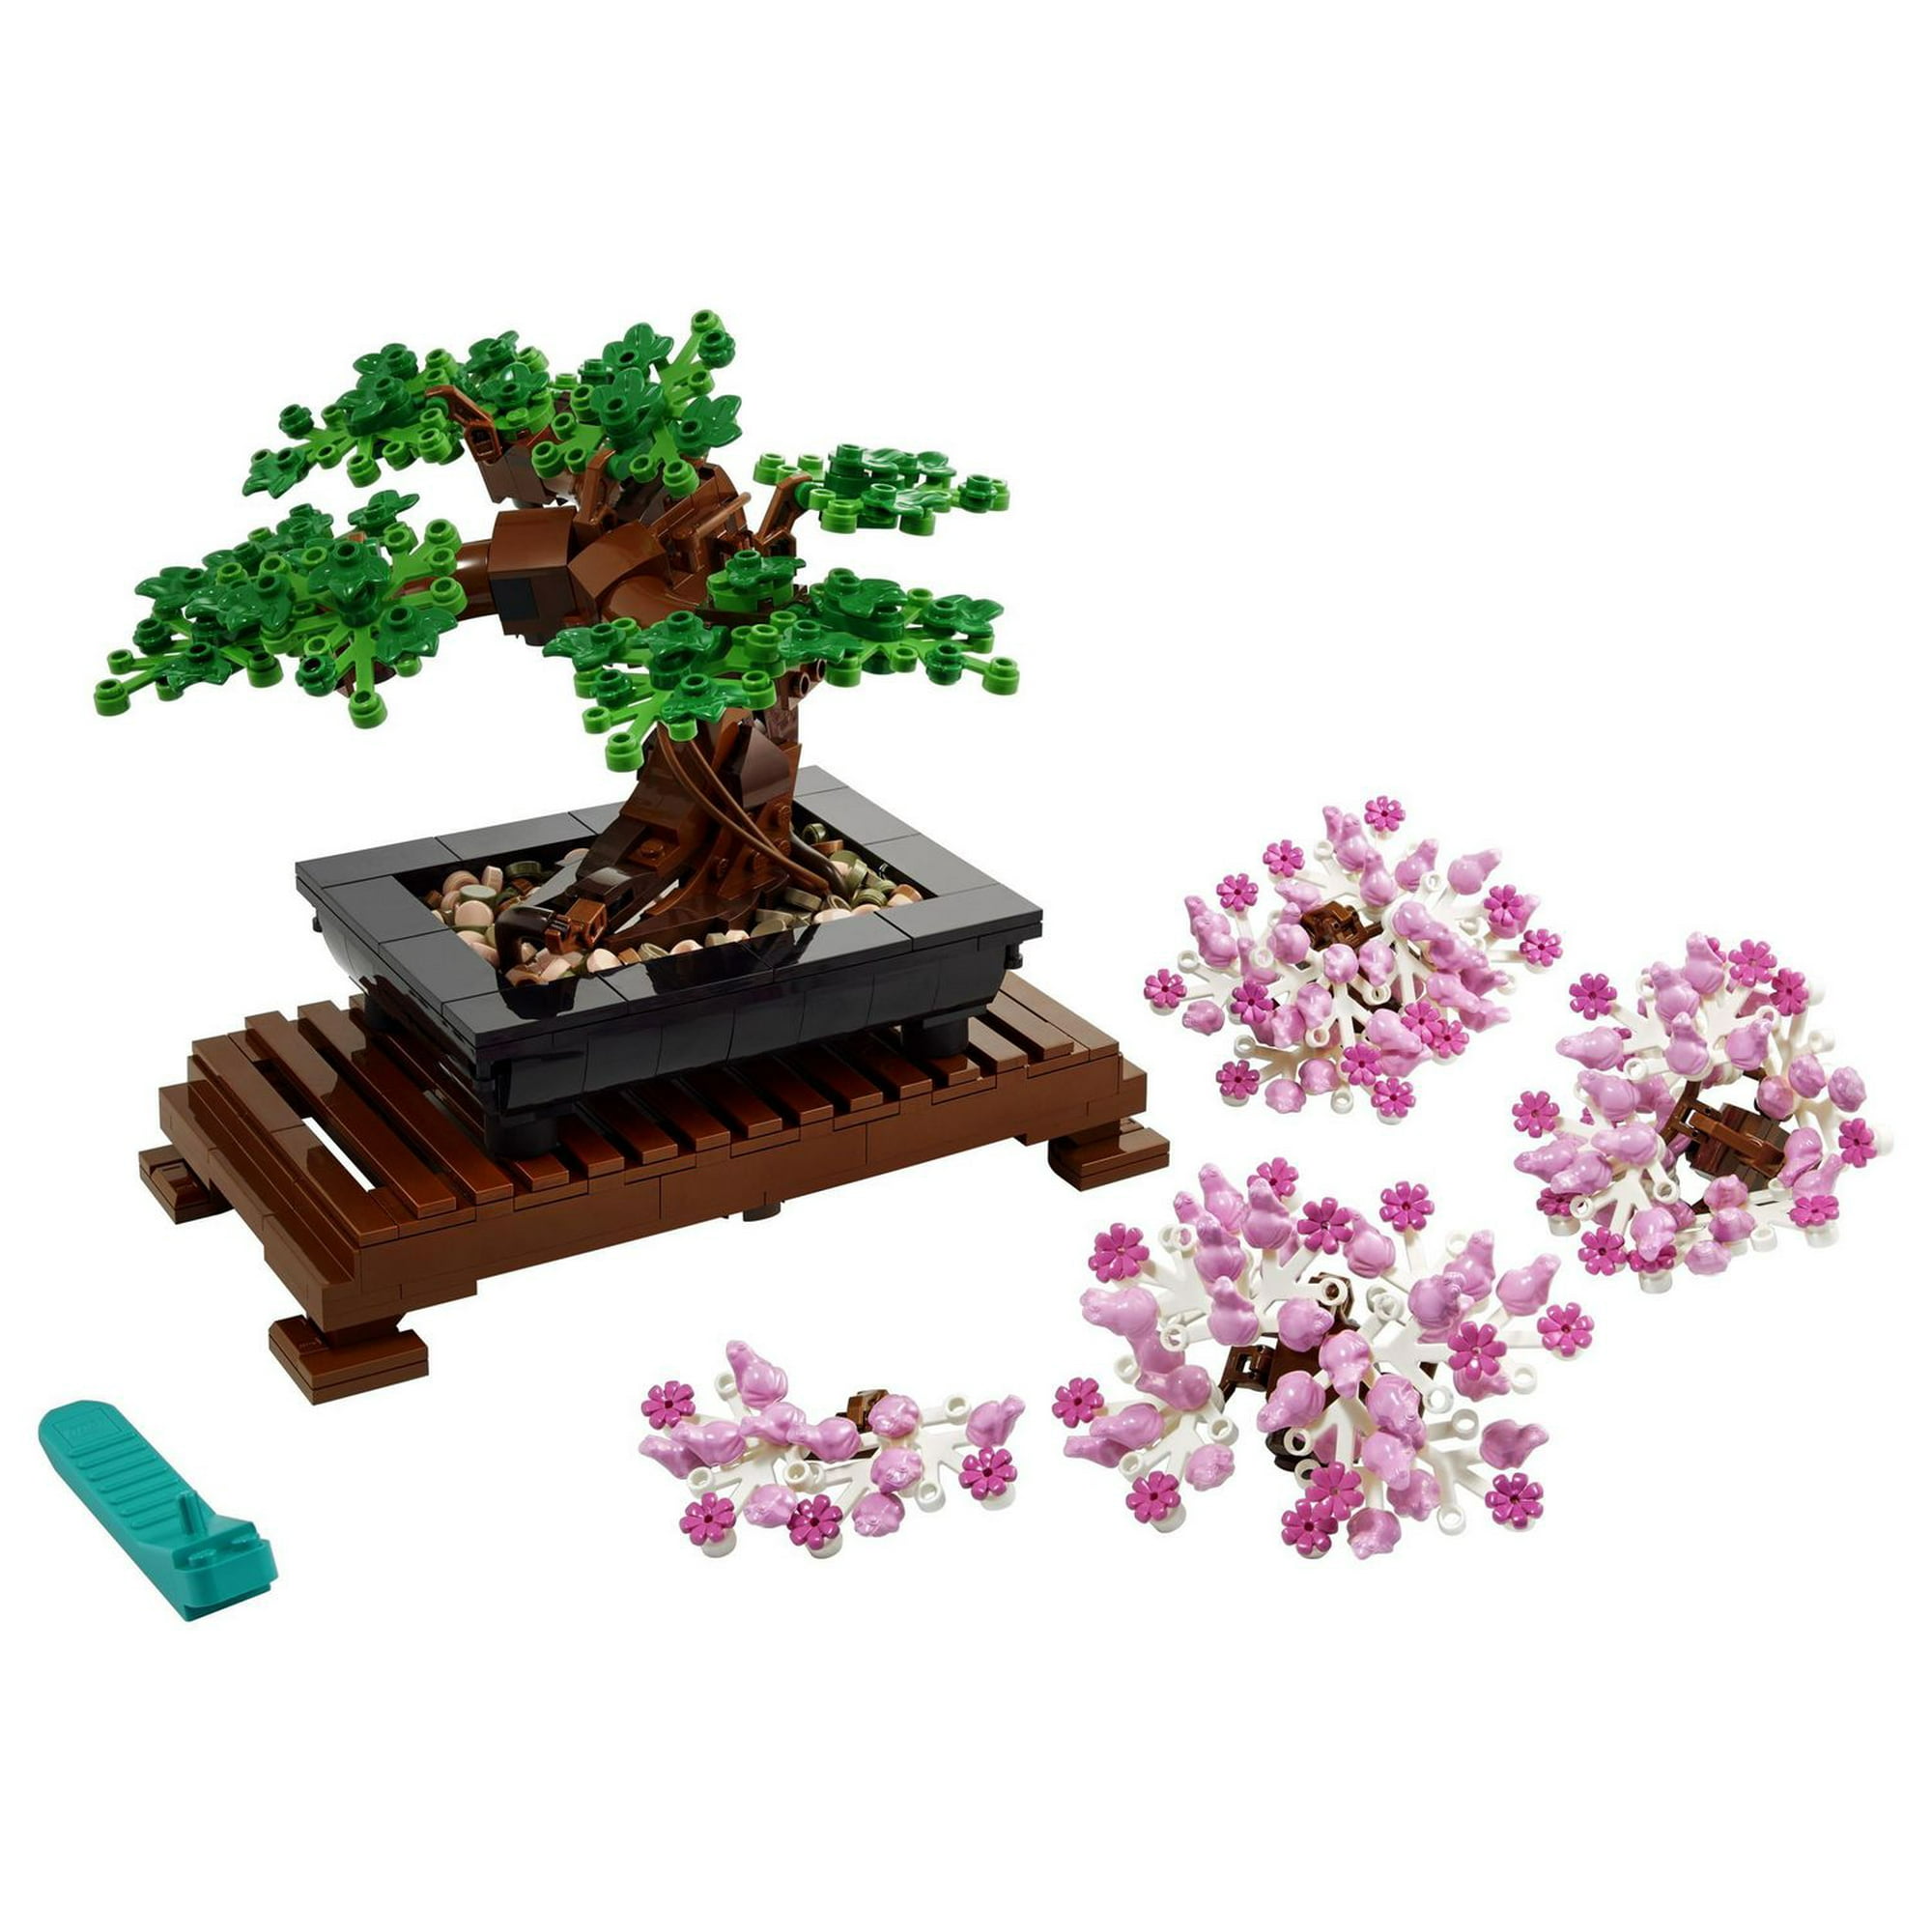 LEGO Icons Bonsai Tree Building Set, Features Cherry Blossom